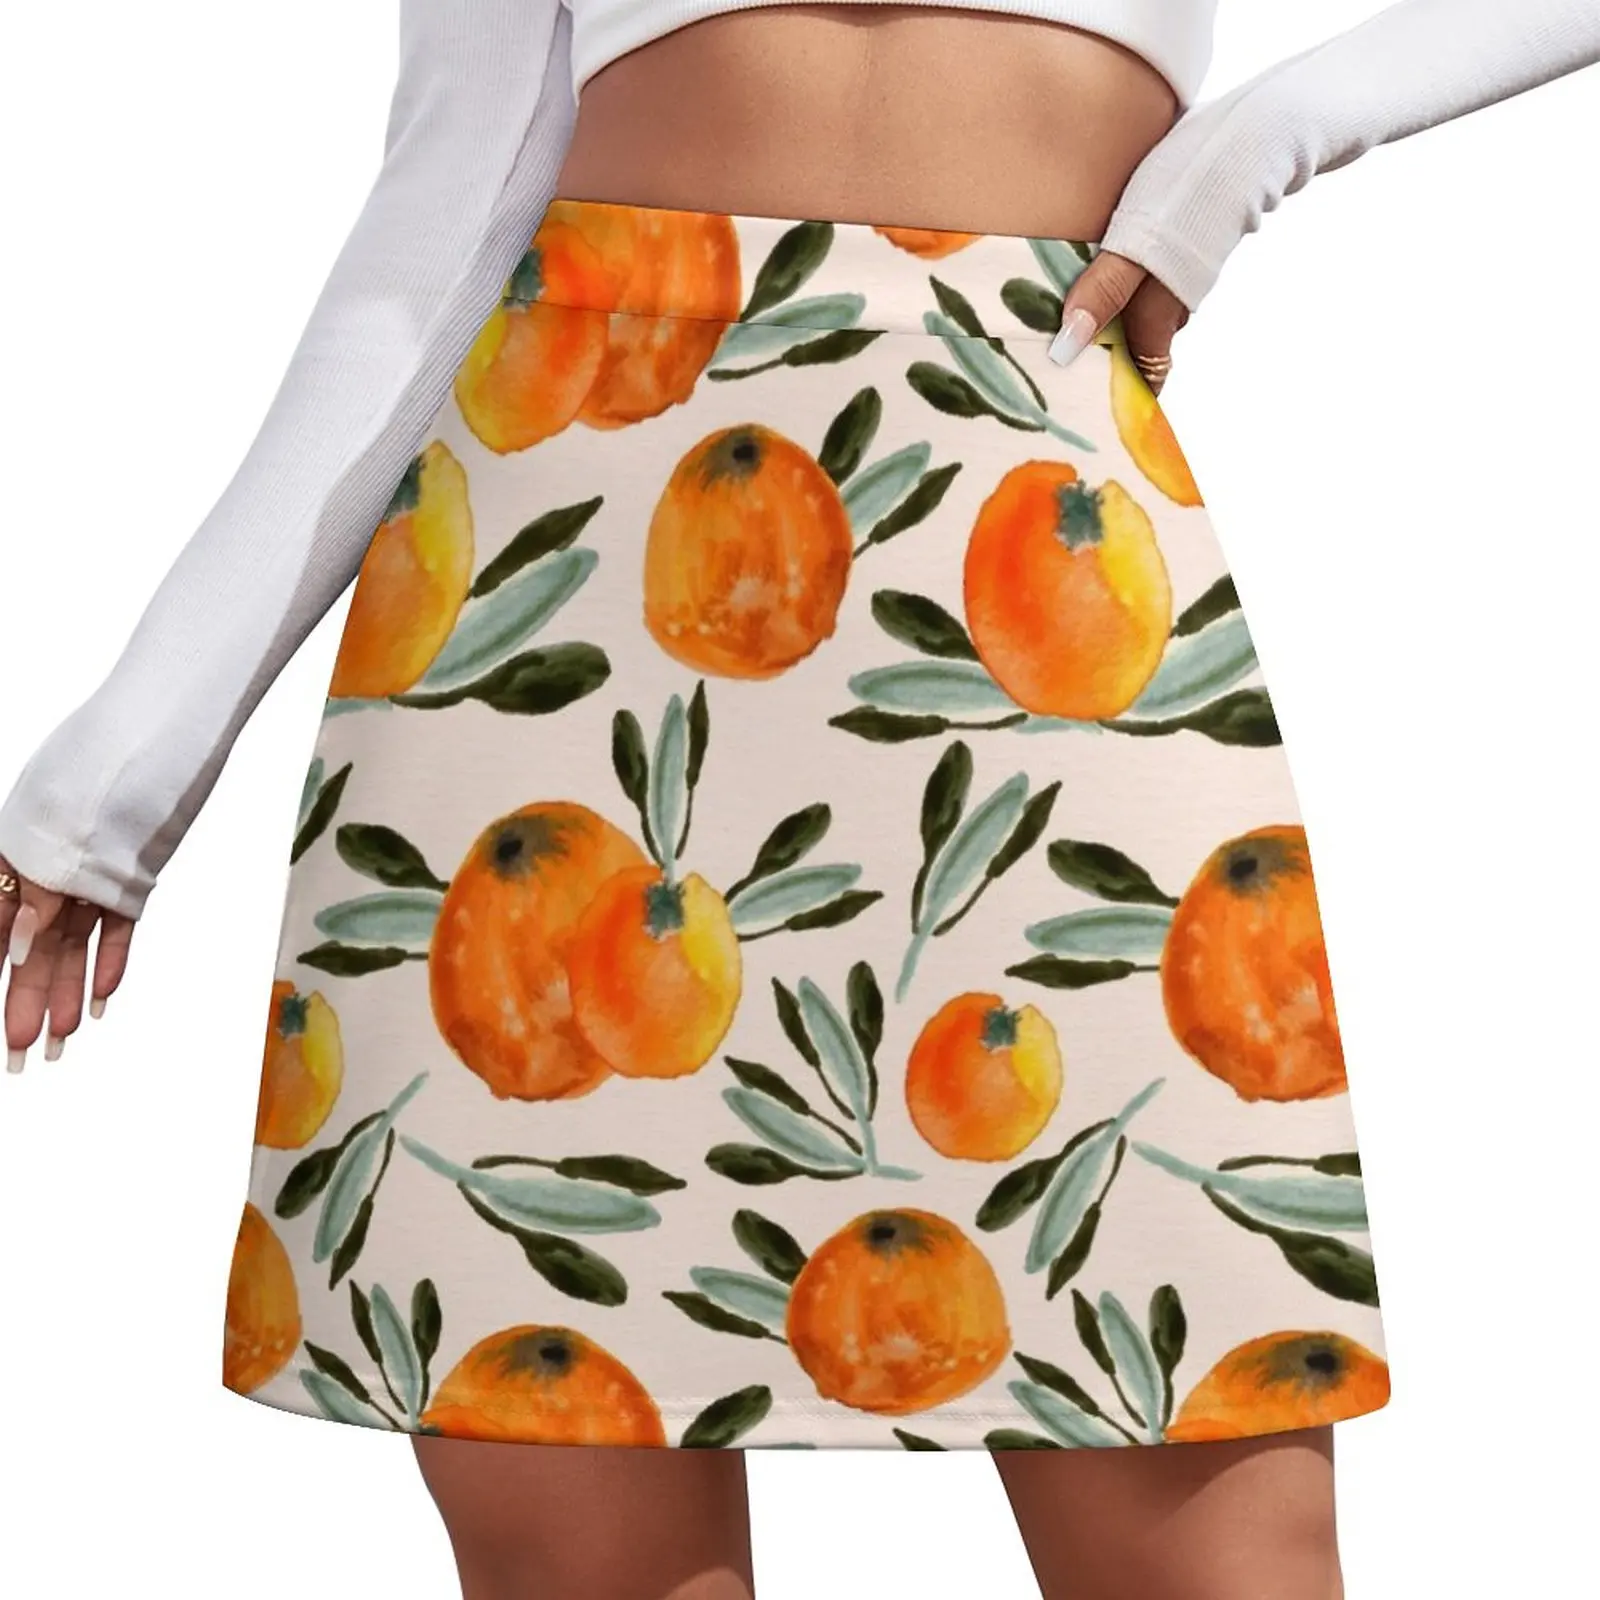 Sunny orange Mini Skirt night club outfit luxury designer clothing women